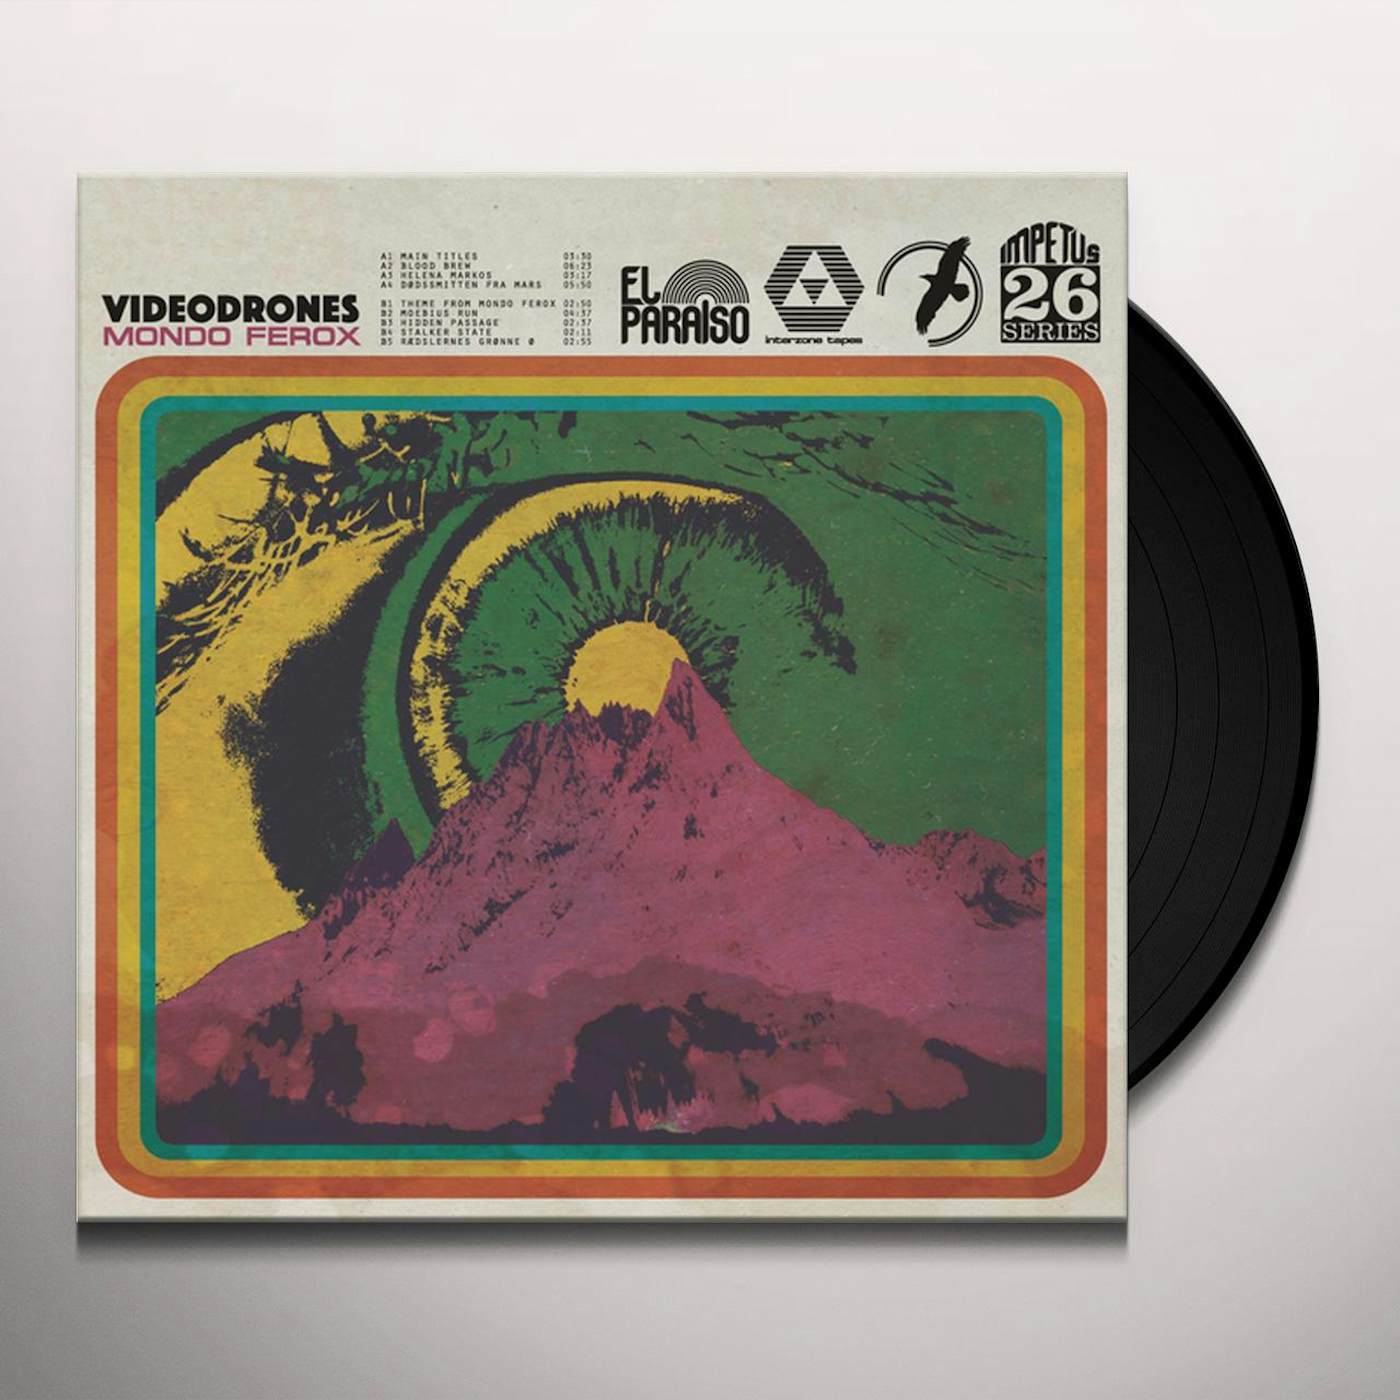 Videodrones Mondo Ferox Vinyl Record